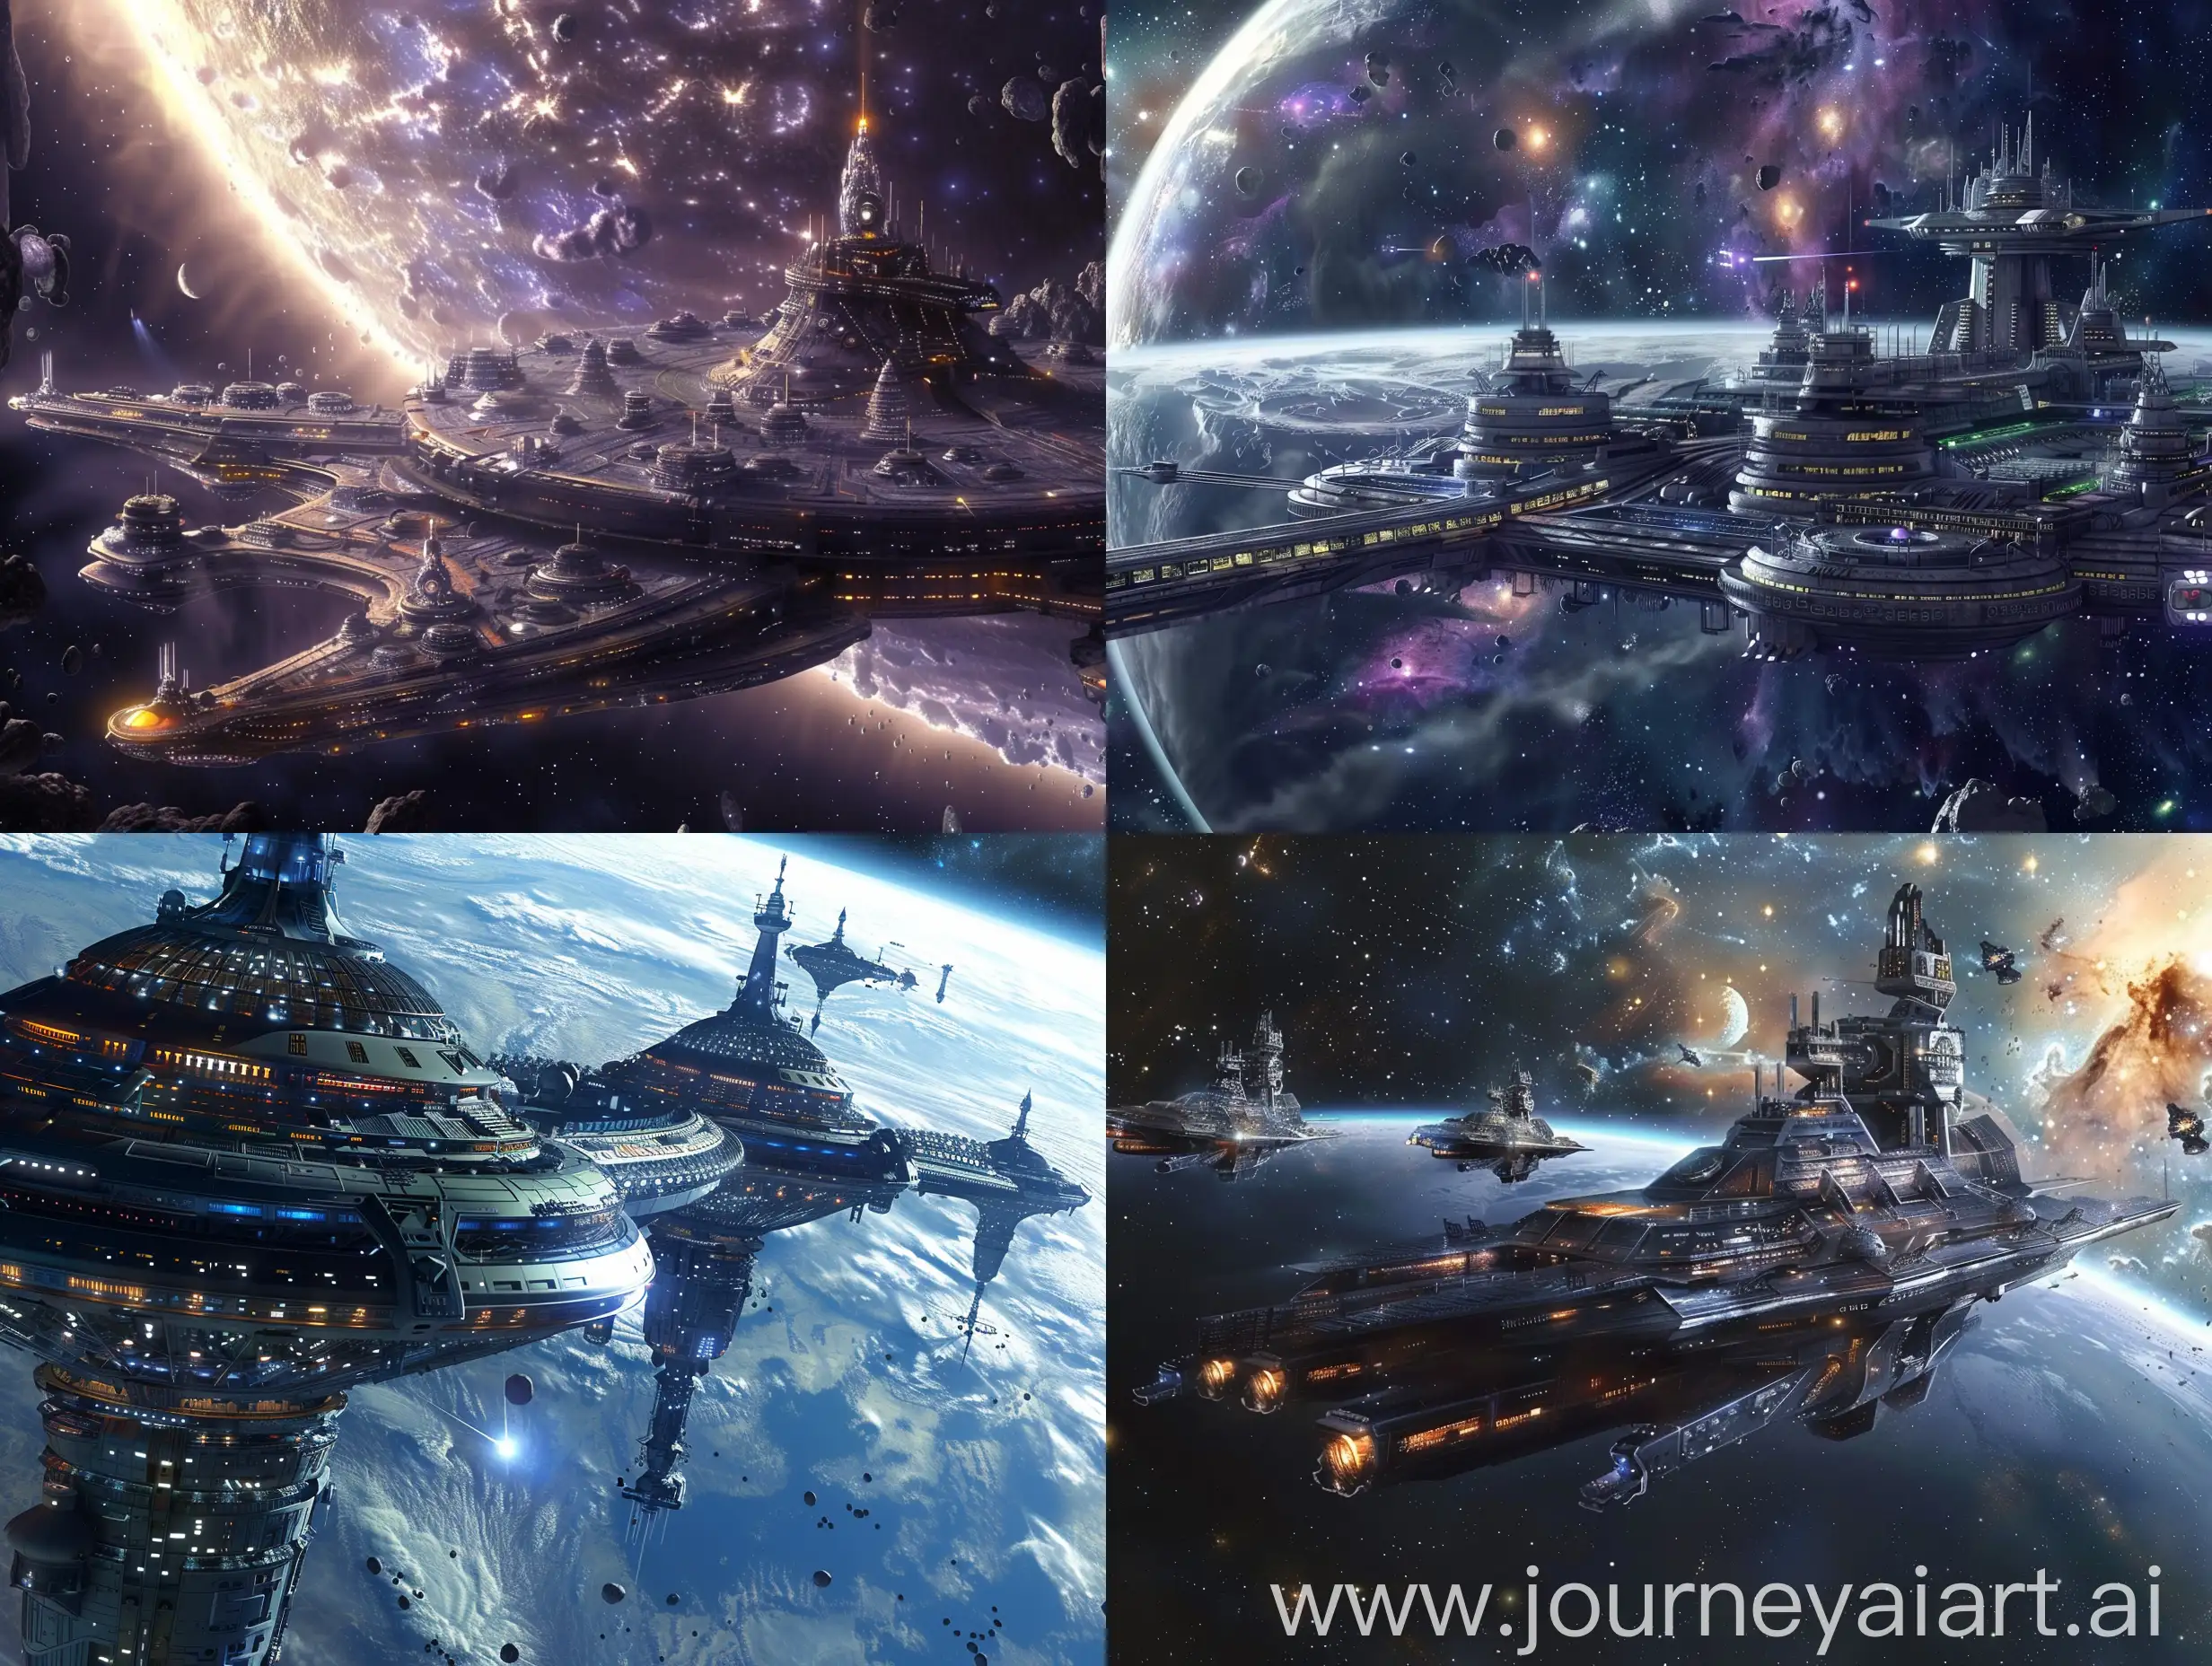 Futuristic-Interstellar-Cityscape-with-Advanced-Spaceship-Bases